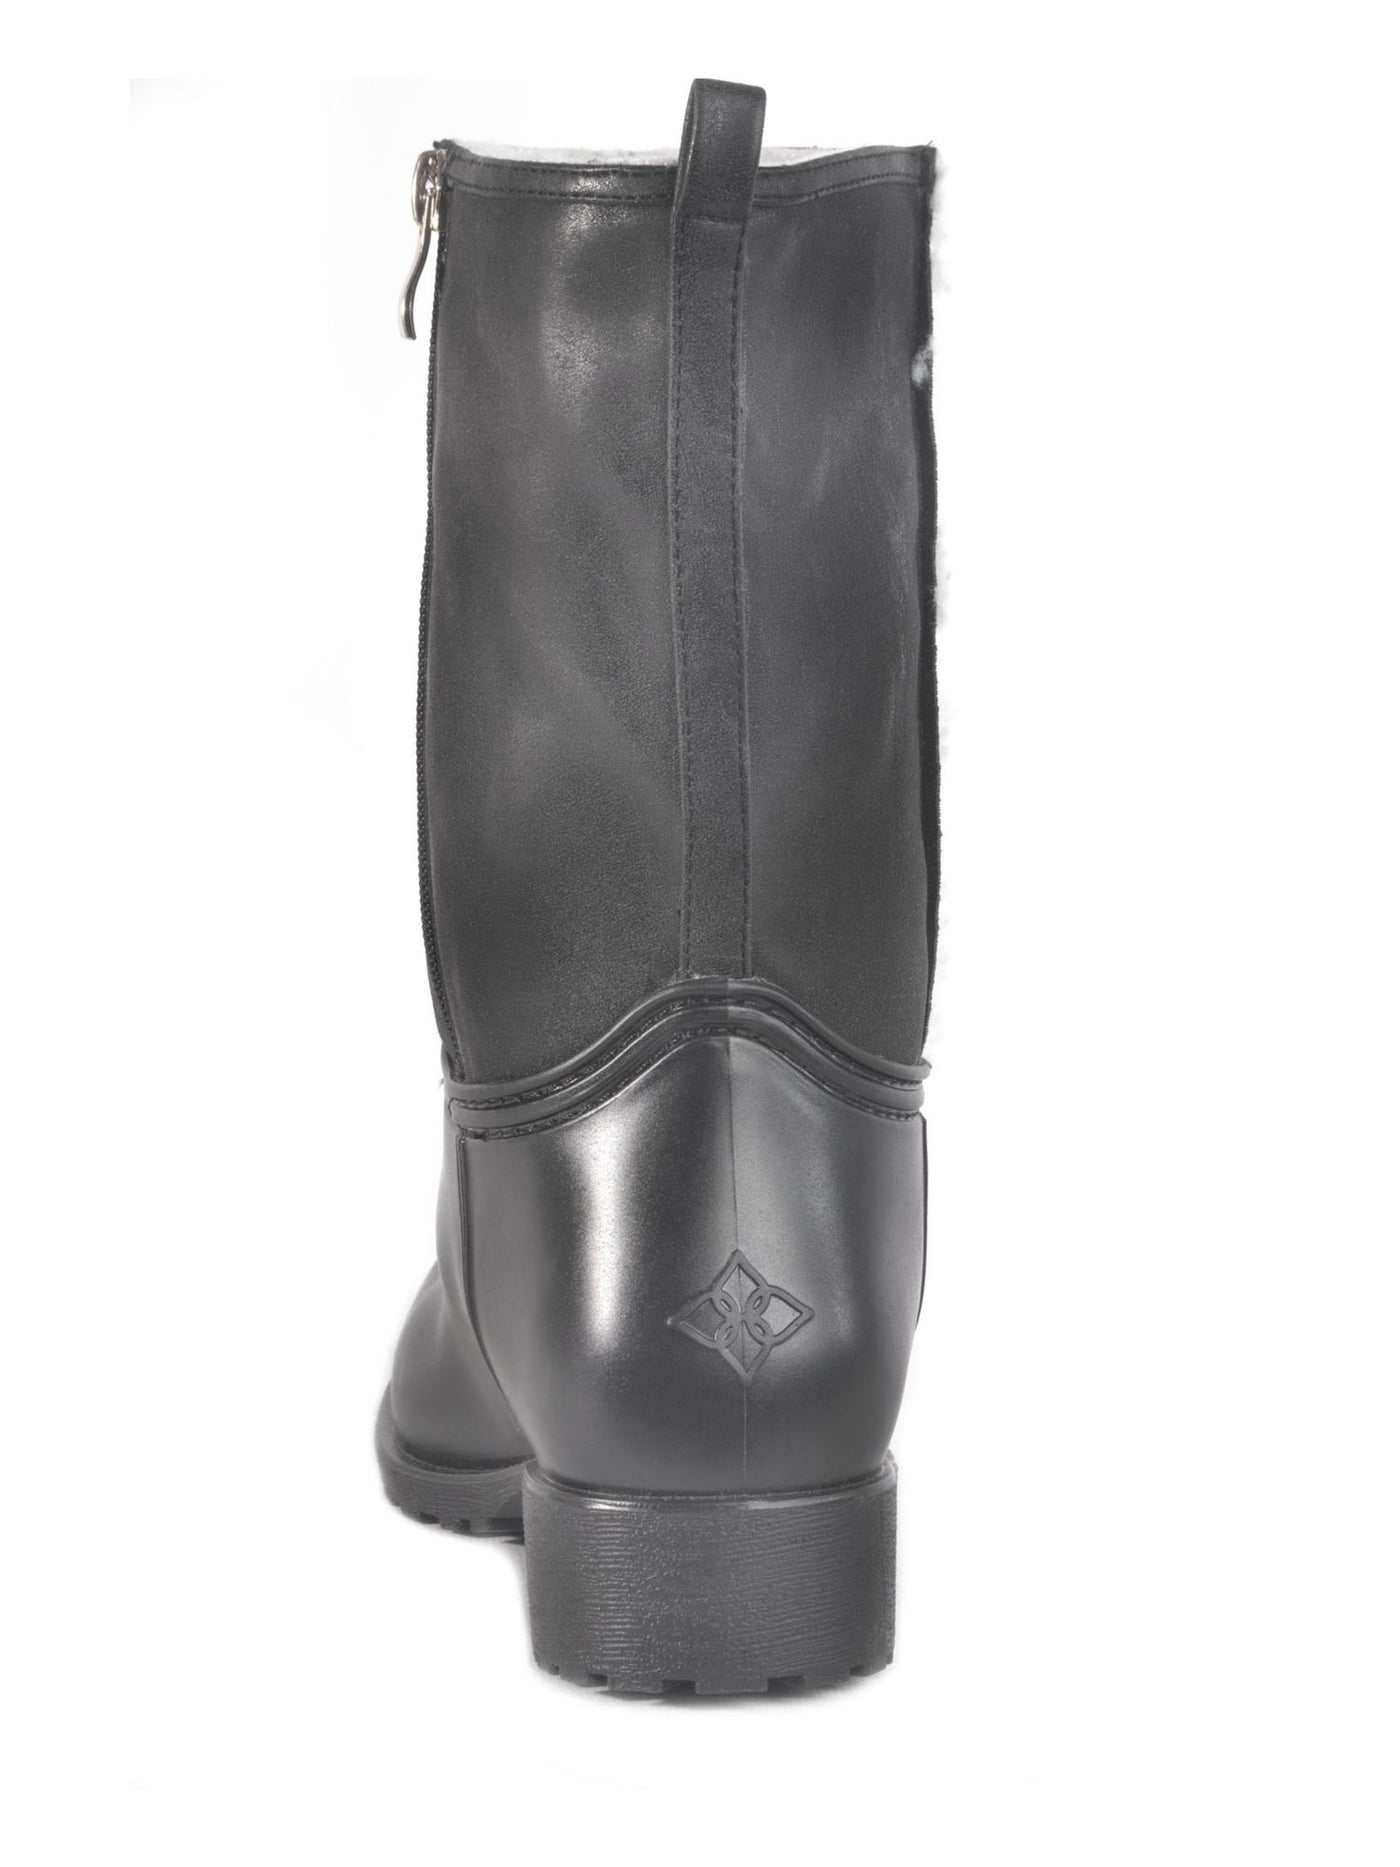 DAV Womens Black Equestrian Water Resistant Moisture Wicking Cheyenne Round Toe Block Heel Zip-Up Booties 7 M